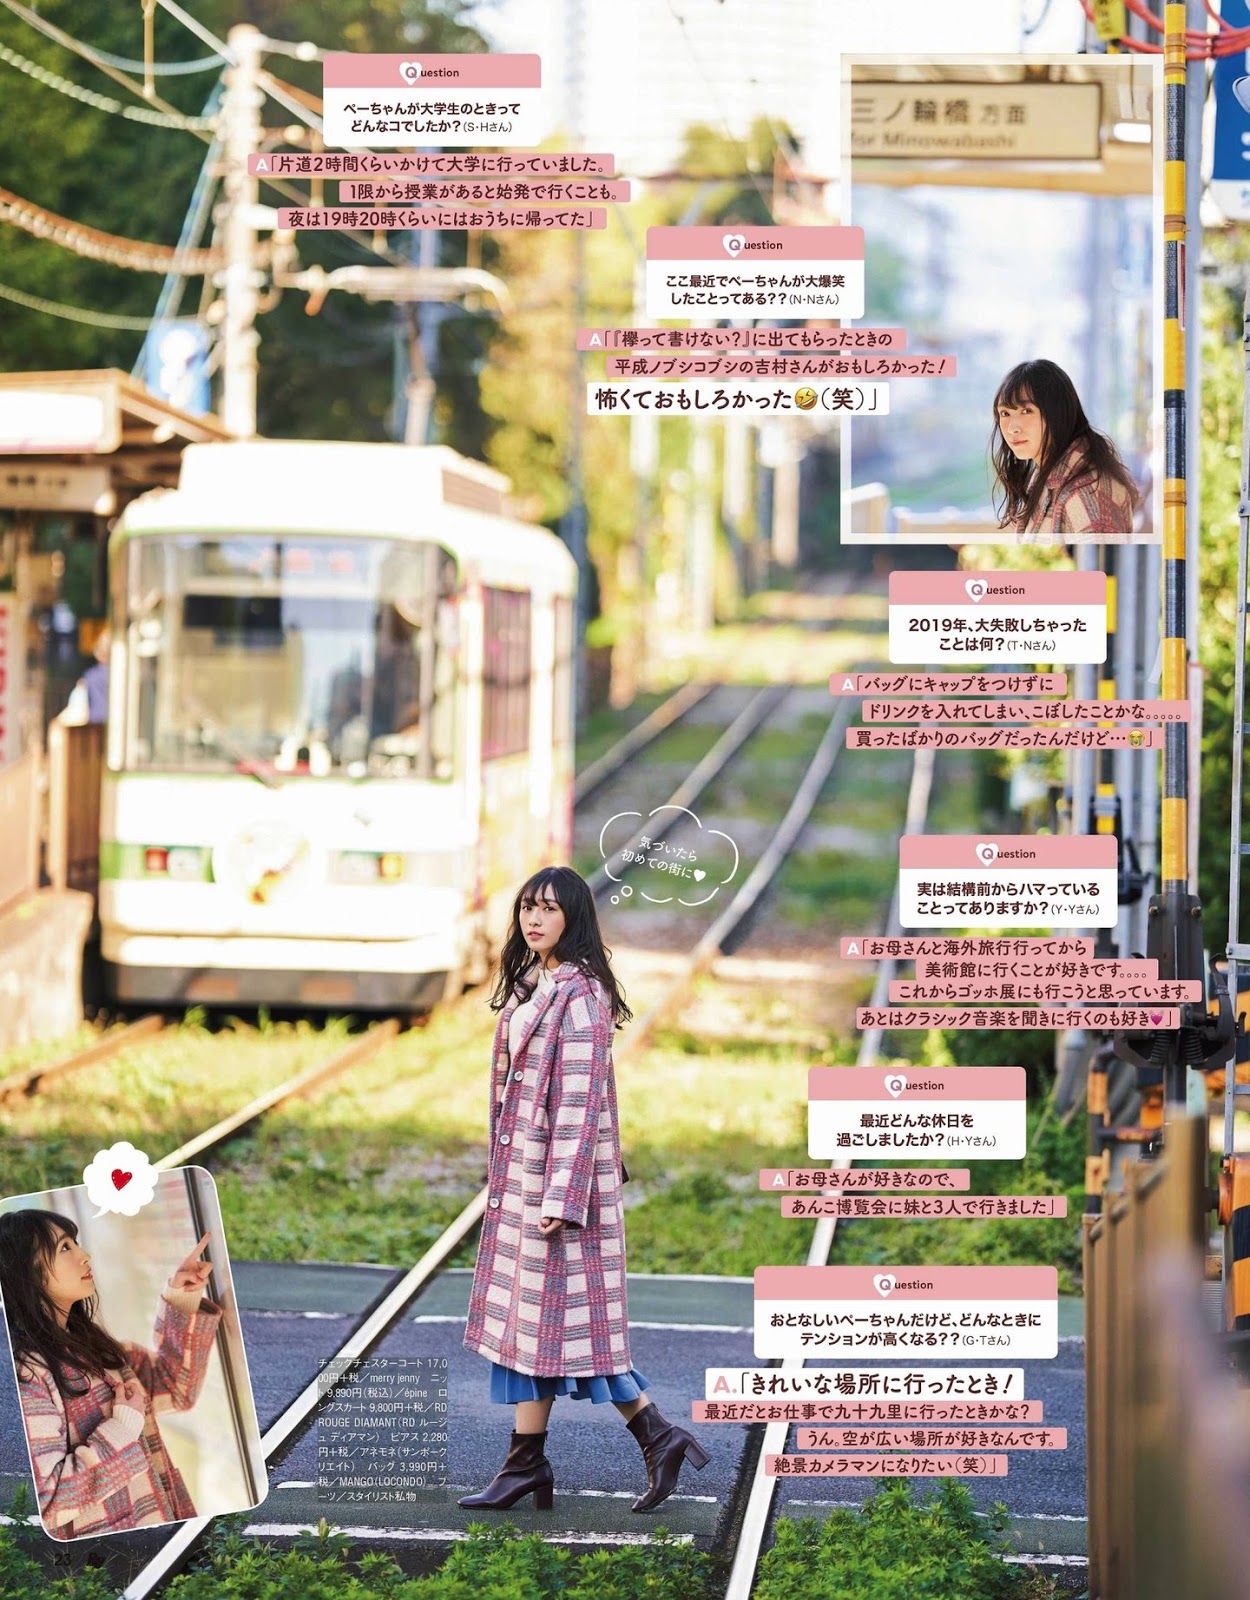 渡辺梨加 Ray Magazine 2020.02